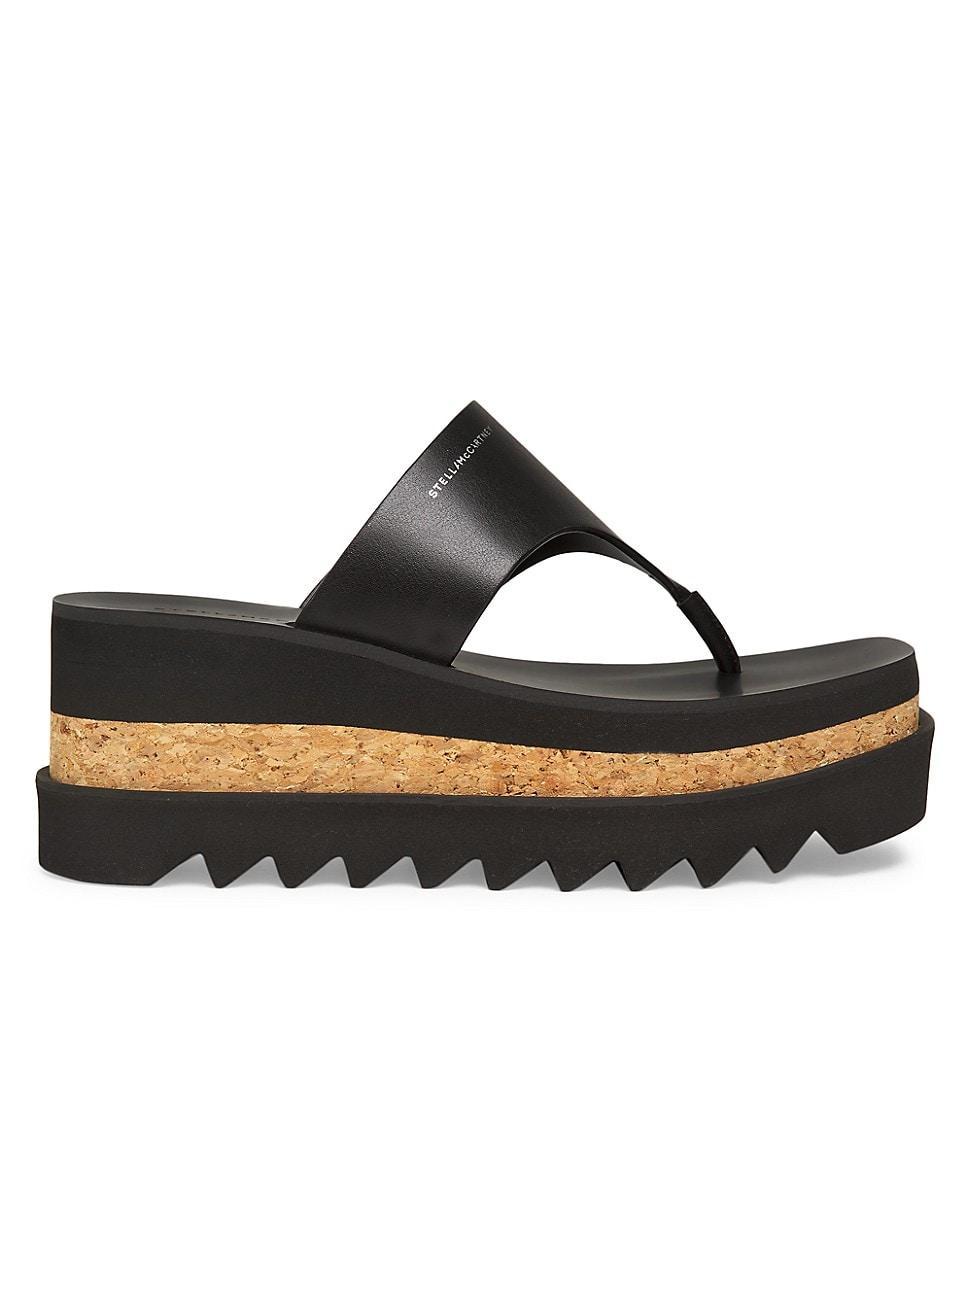 Womens Sneak Elyse 80MM Platform Wedge Sandals Product Image